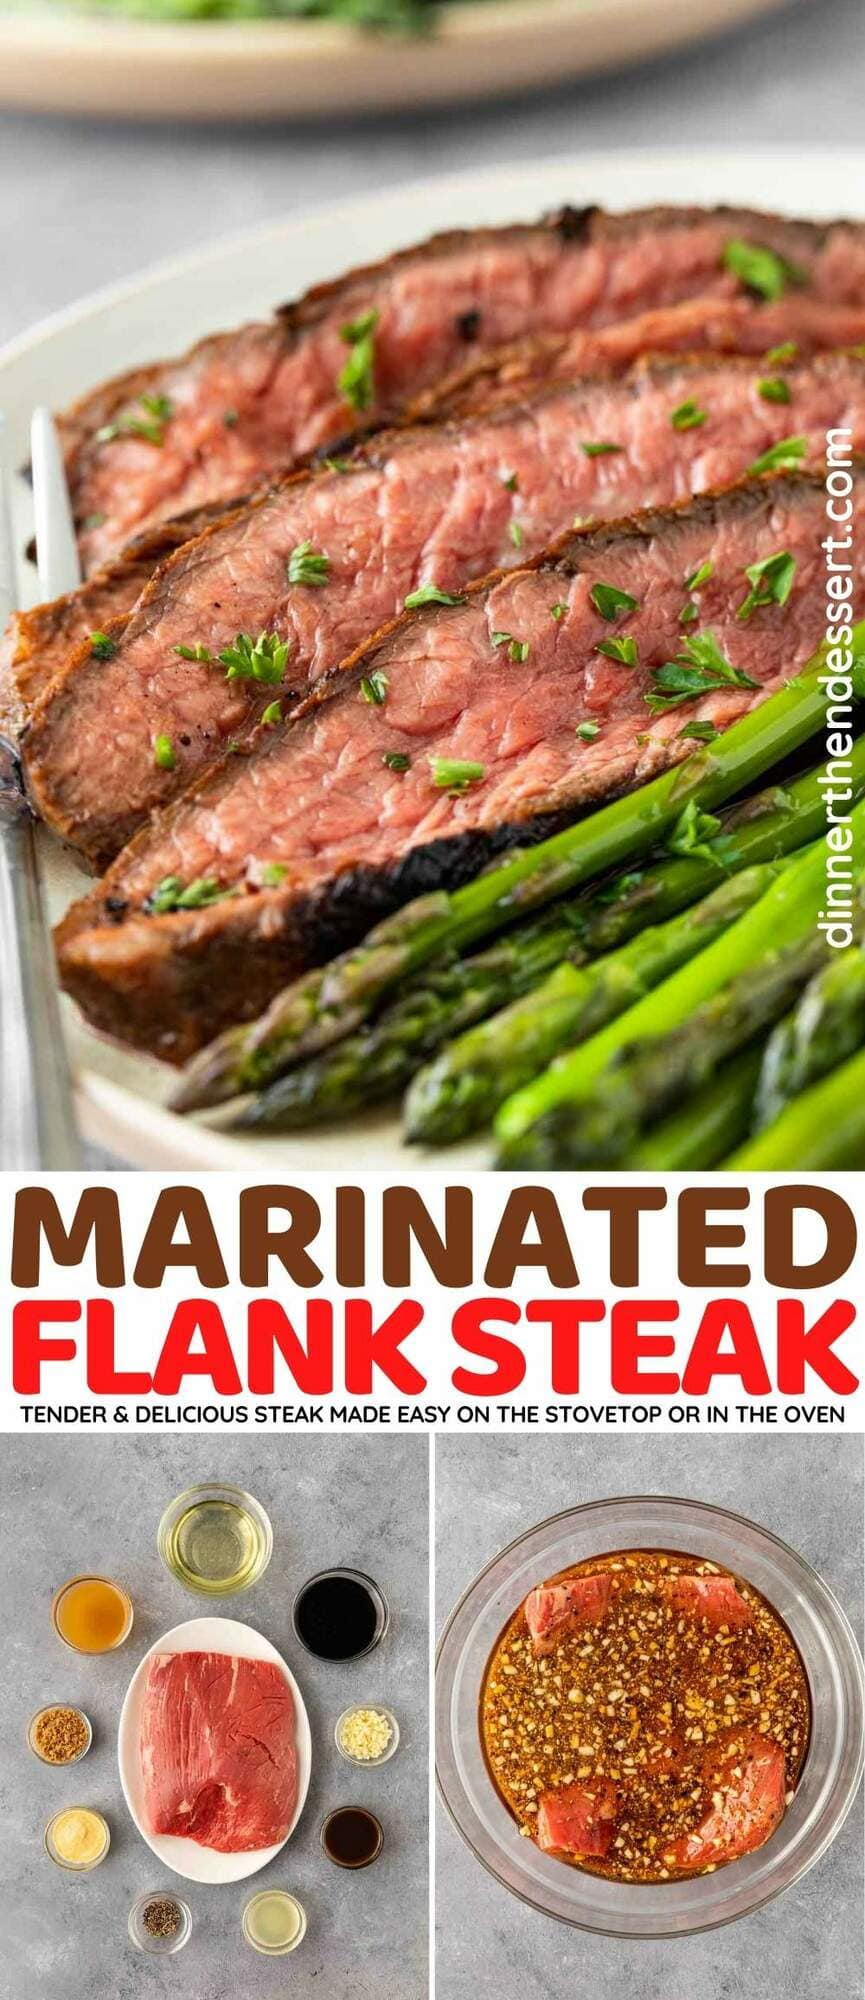 Marinated Flank Steak collage